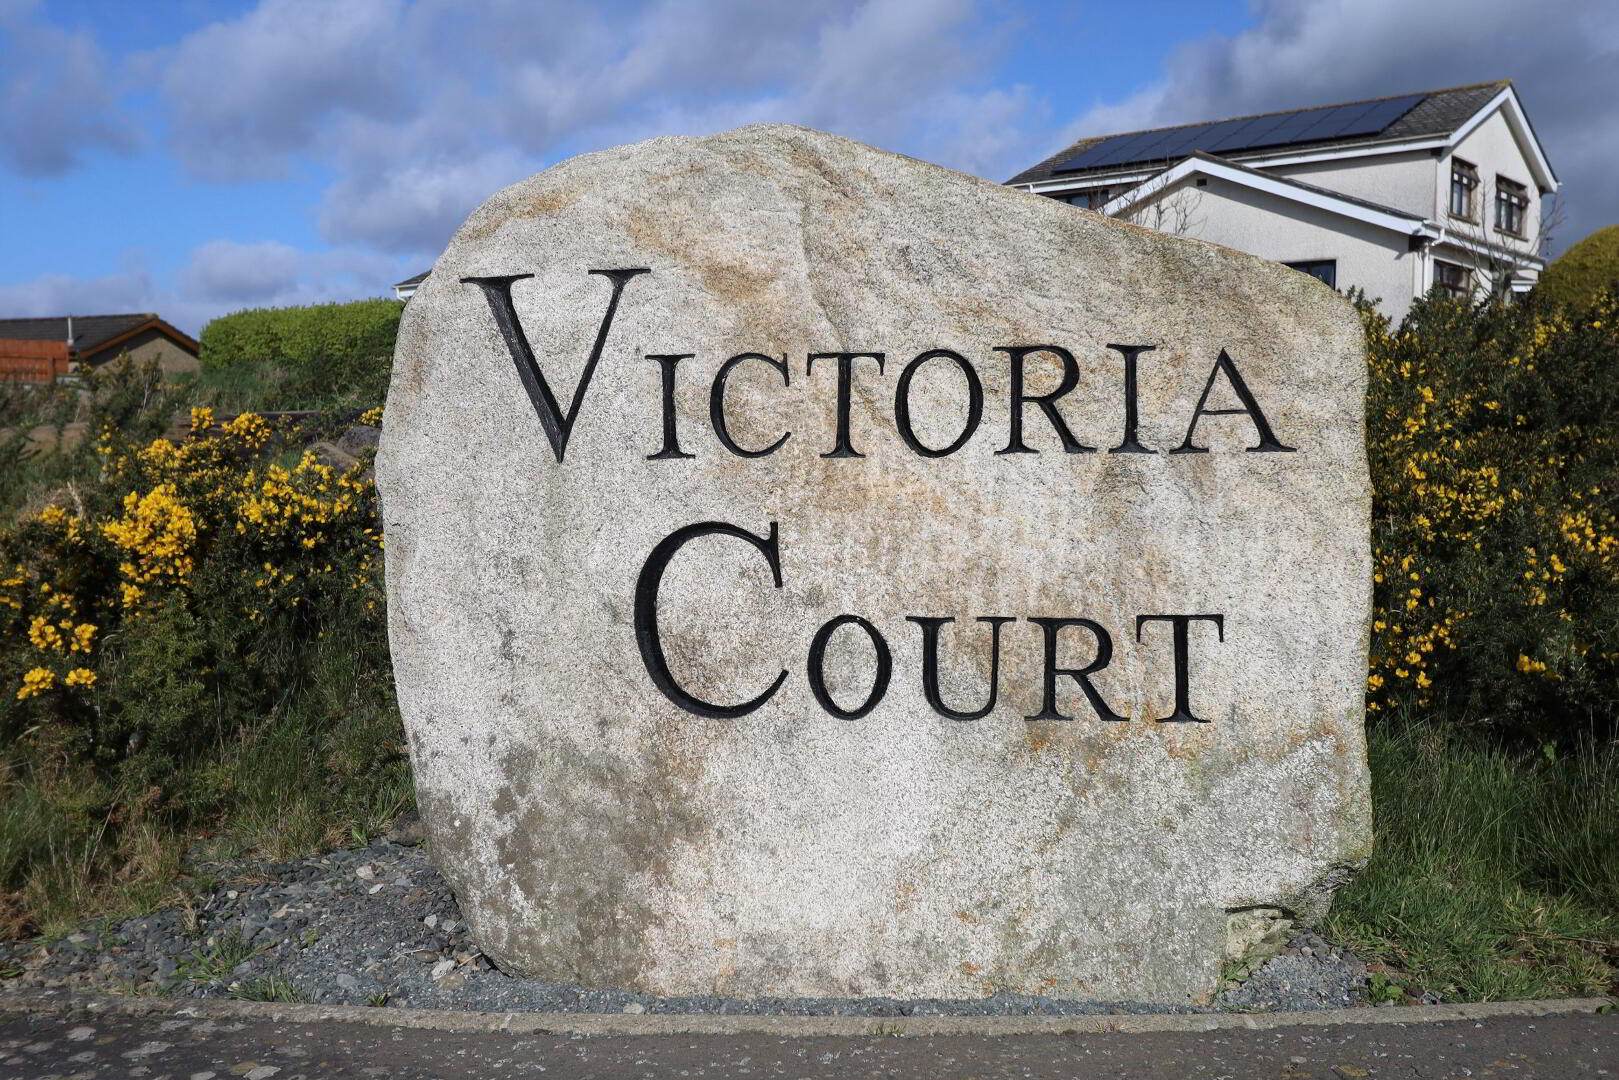 Building Site For Sale Victoria Court